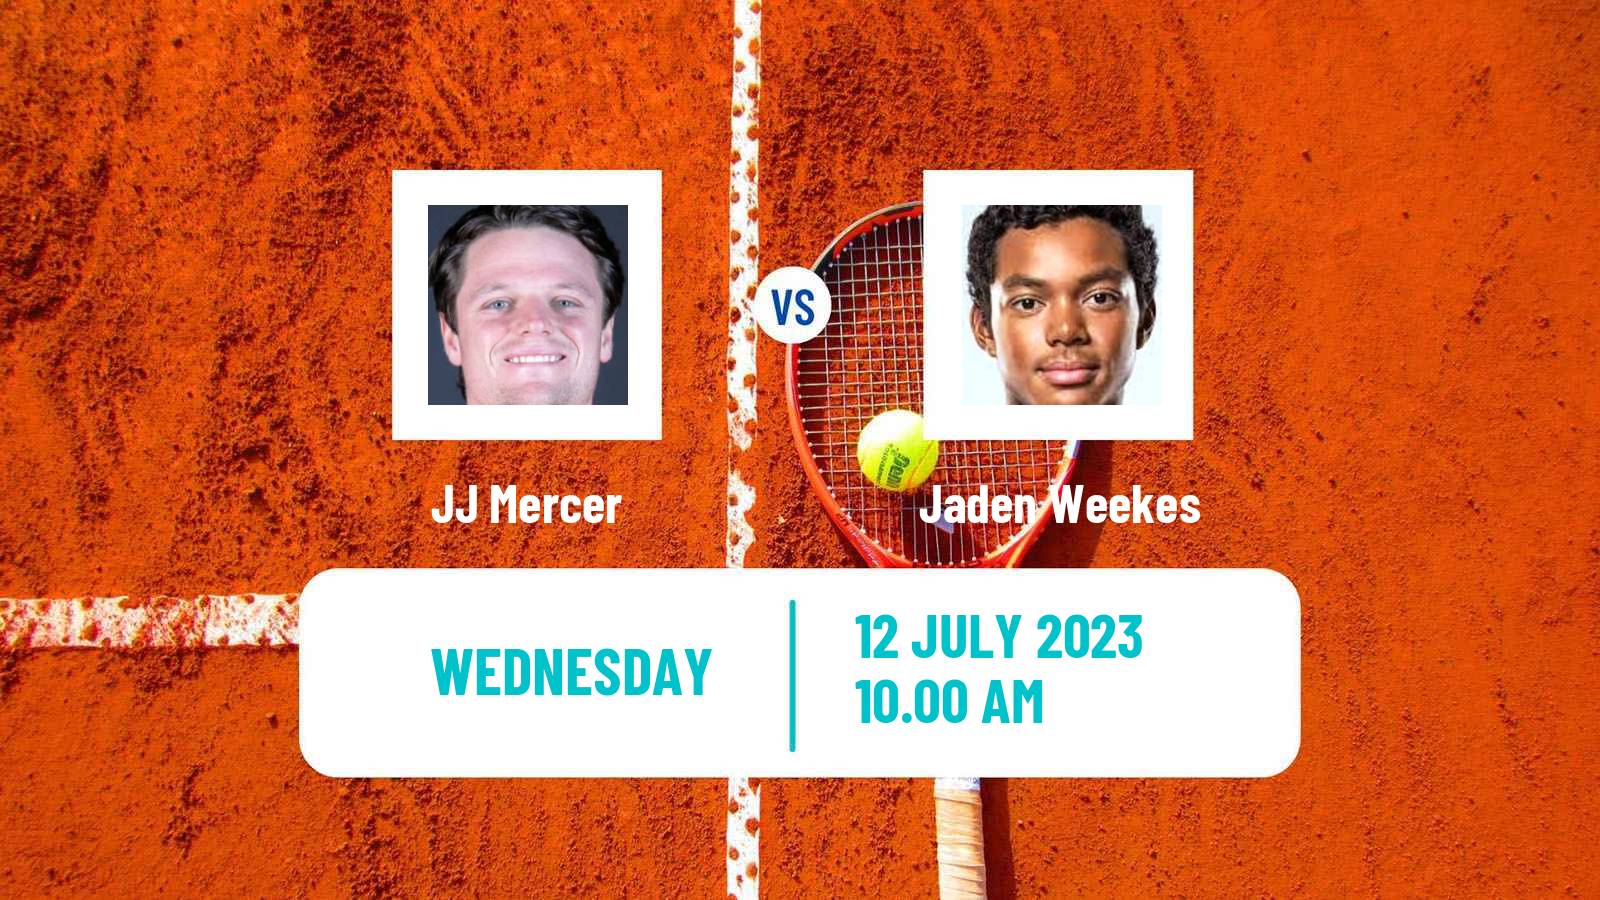 Tennis ITF M25 Laval Men JJ Mercer - Jaden Weekes